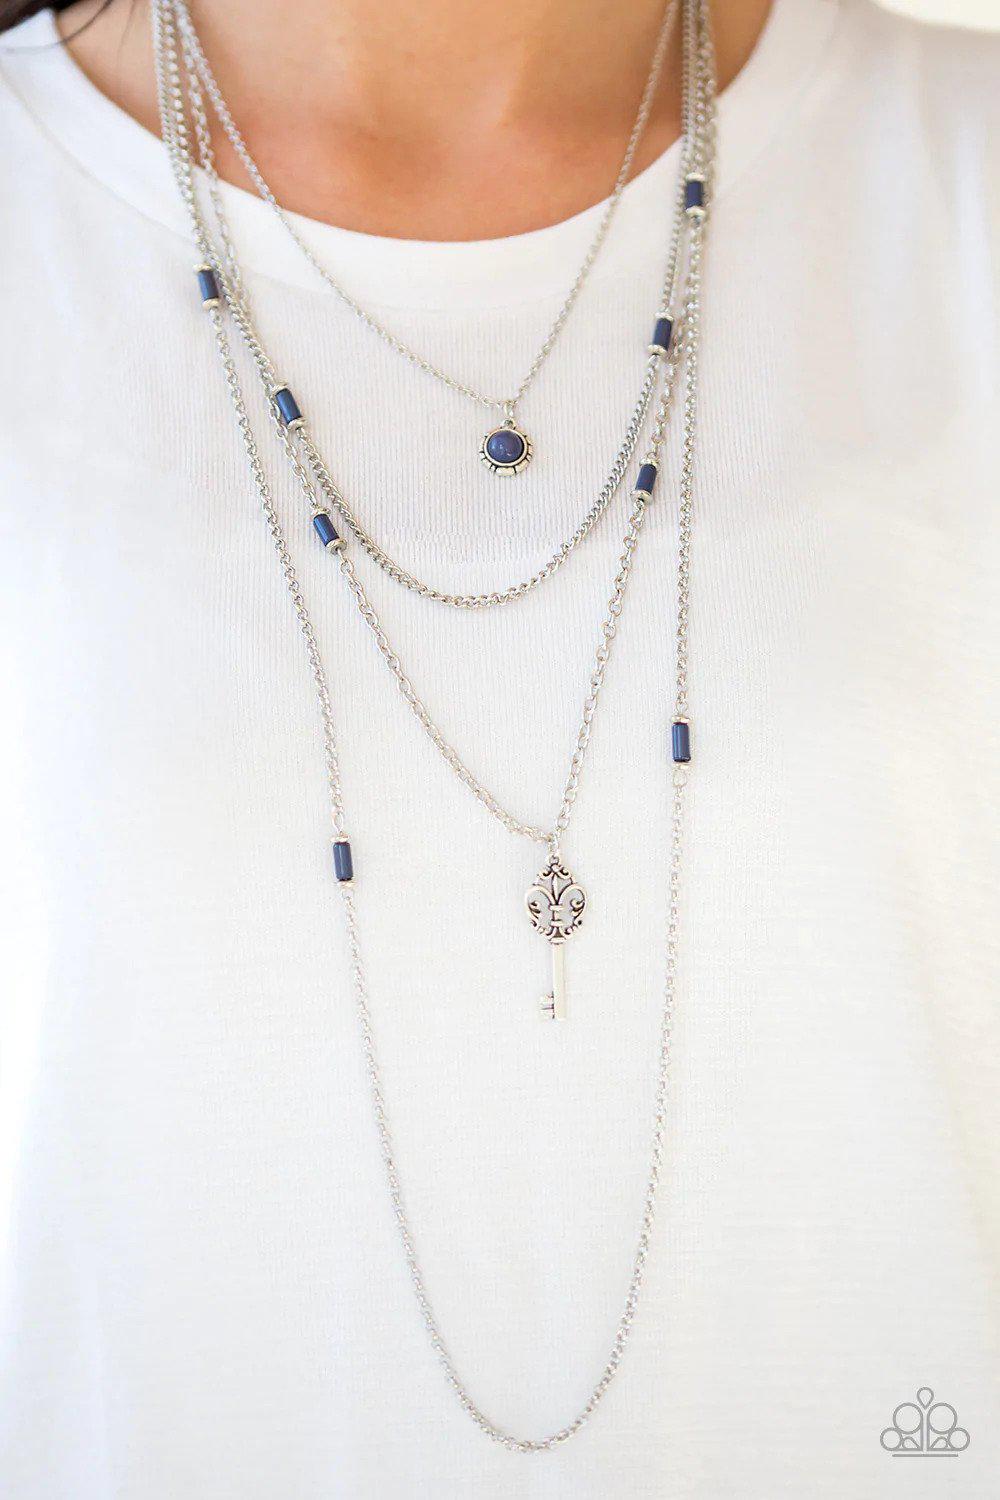 Key Keynote Blue Necklace - Paparazzi Accessories- on model - CarasShop.com - $5 Jewelry by Cara Jewels